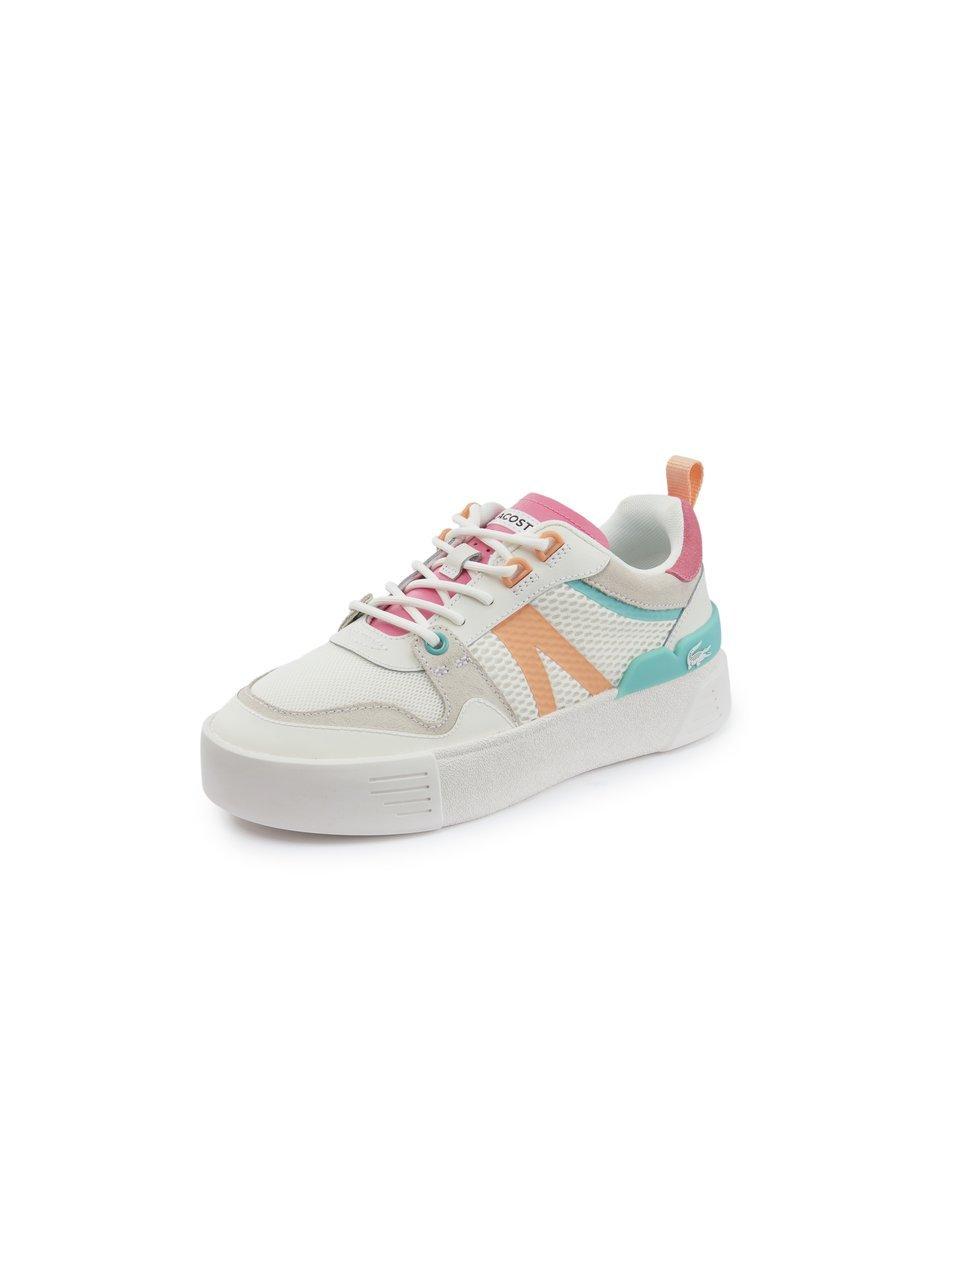 Lacoste L002 Dames Sneakers - Wit/Multicolour - Maat 40